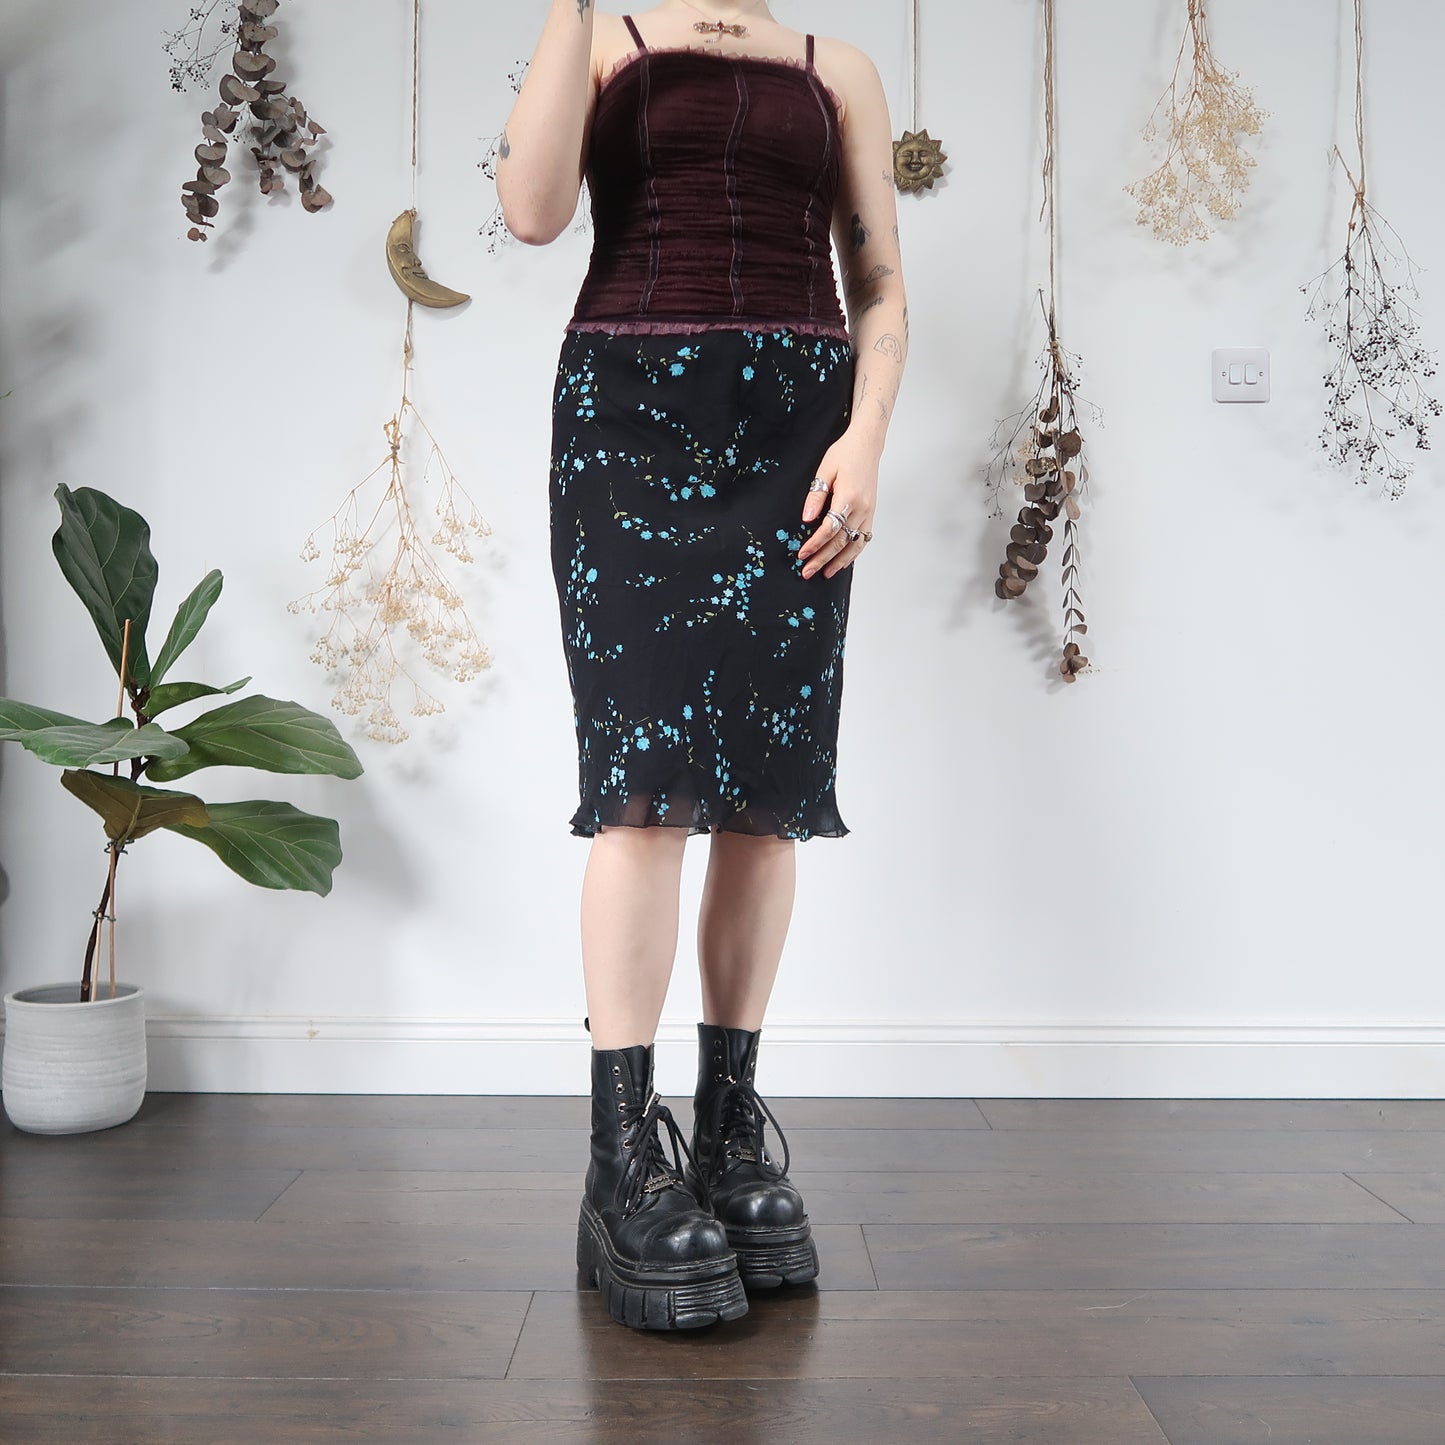 Floral skirt - size M/L